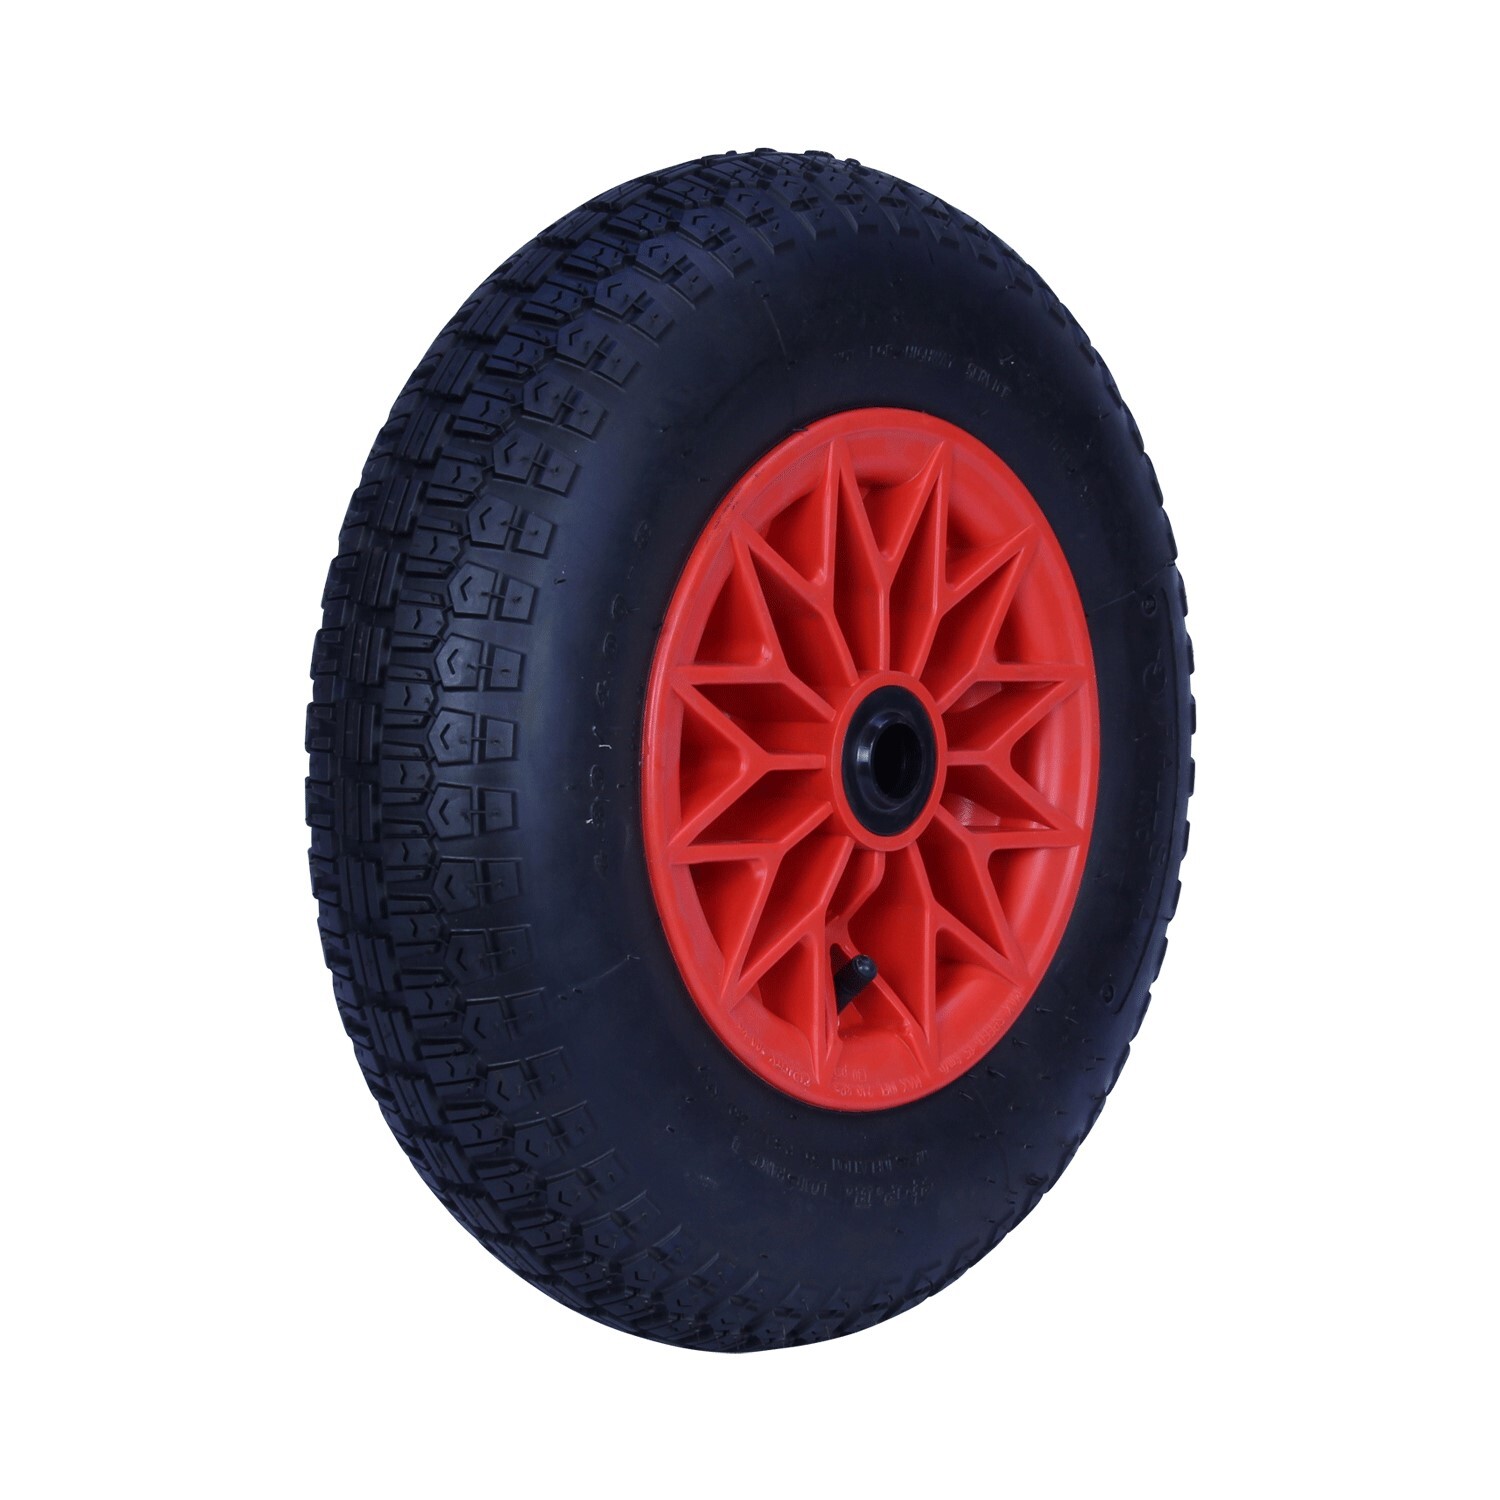 200kg Rated Pneumatic Wheel Tyre - Plastic Centre - 400mm x 100mm - Plain Bore - 25.4mm